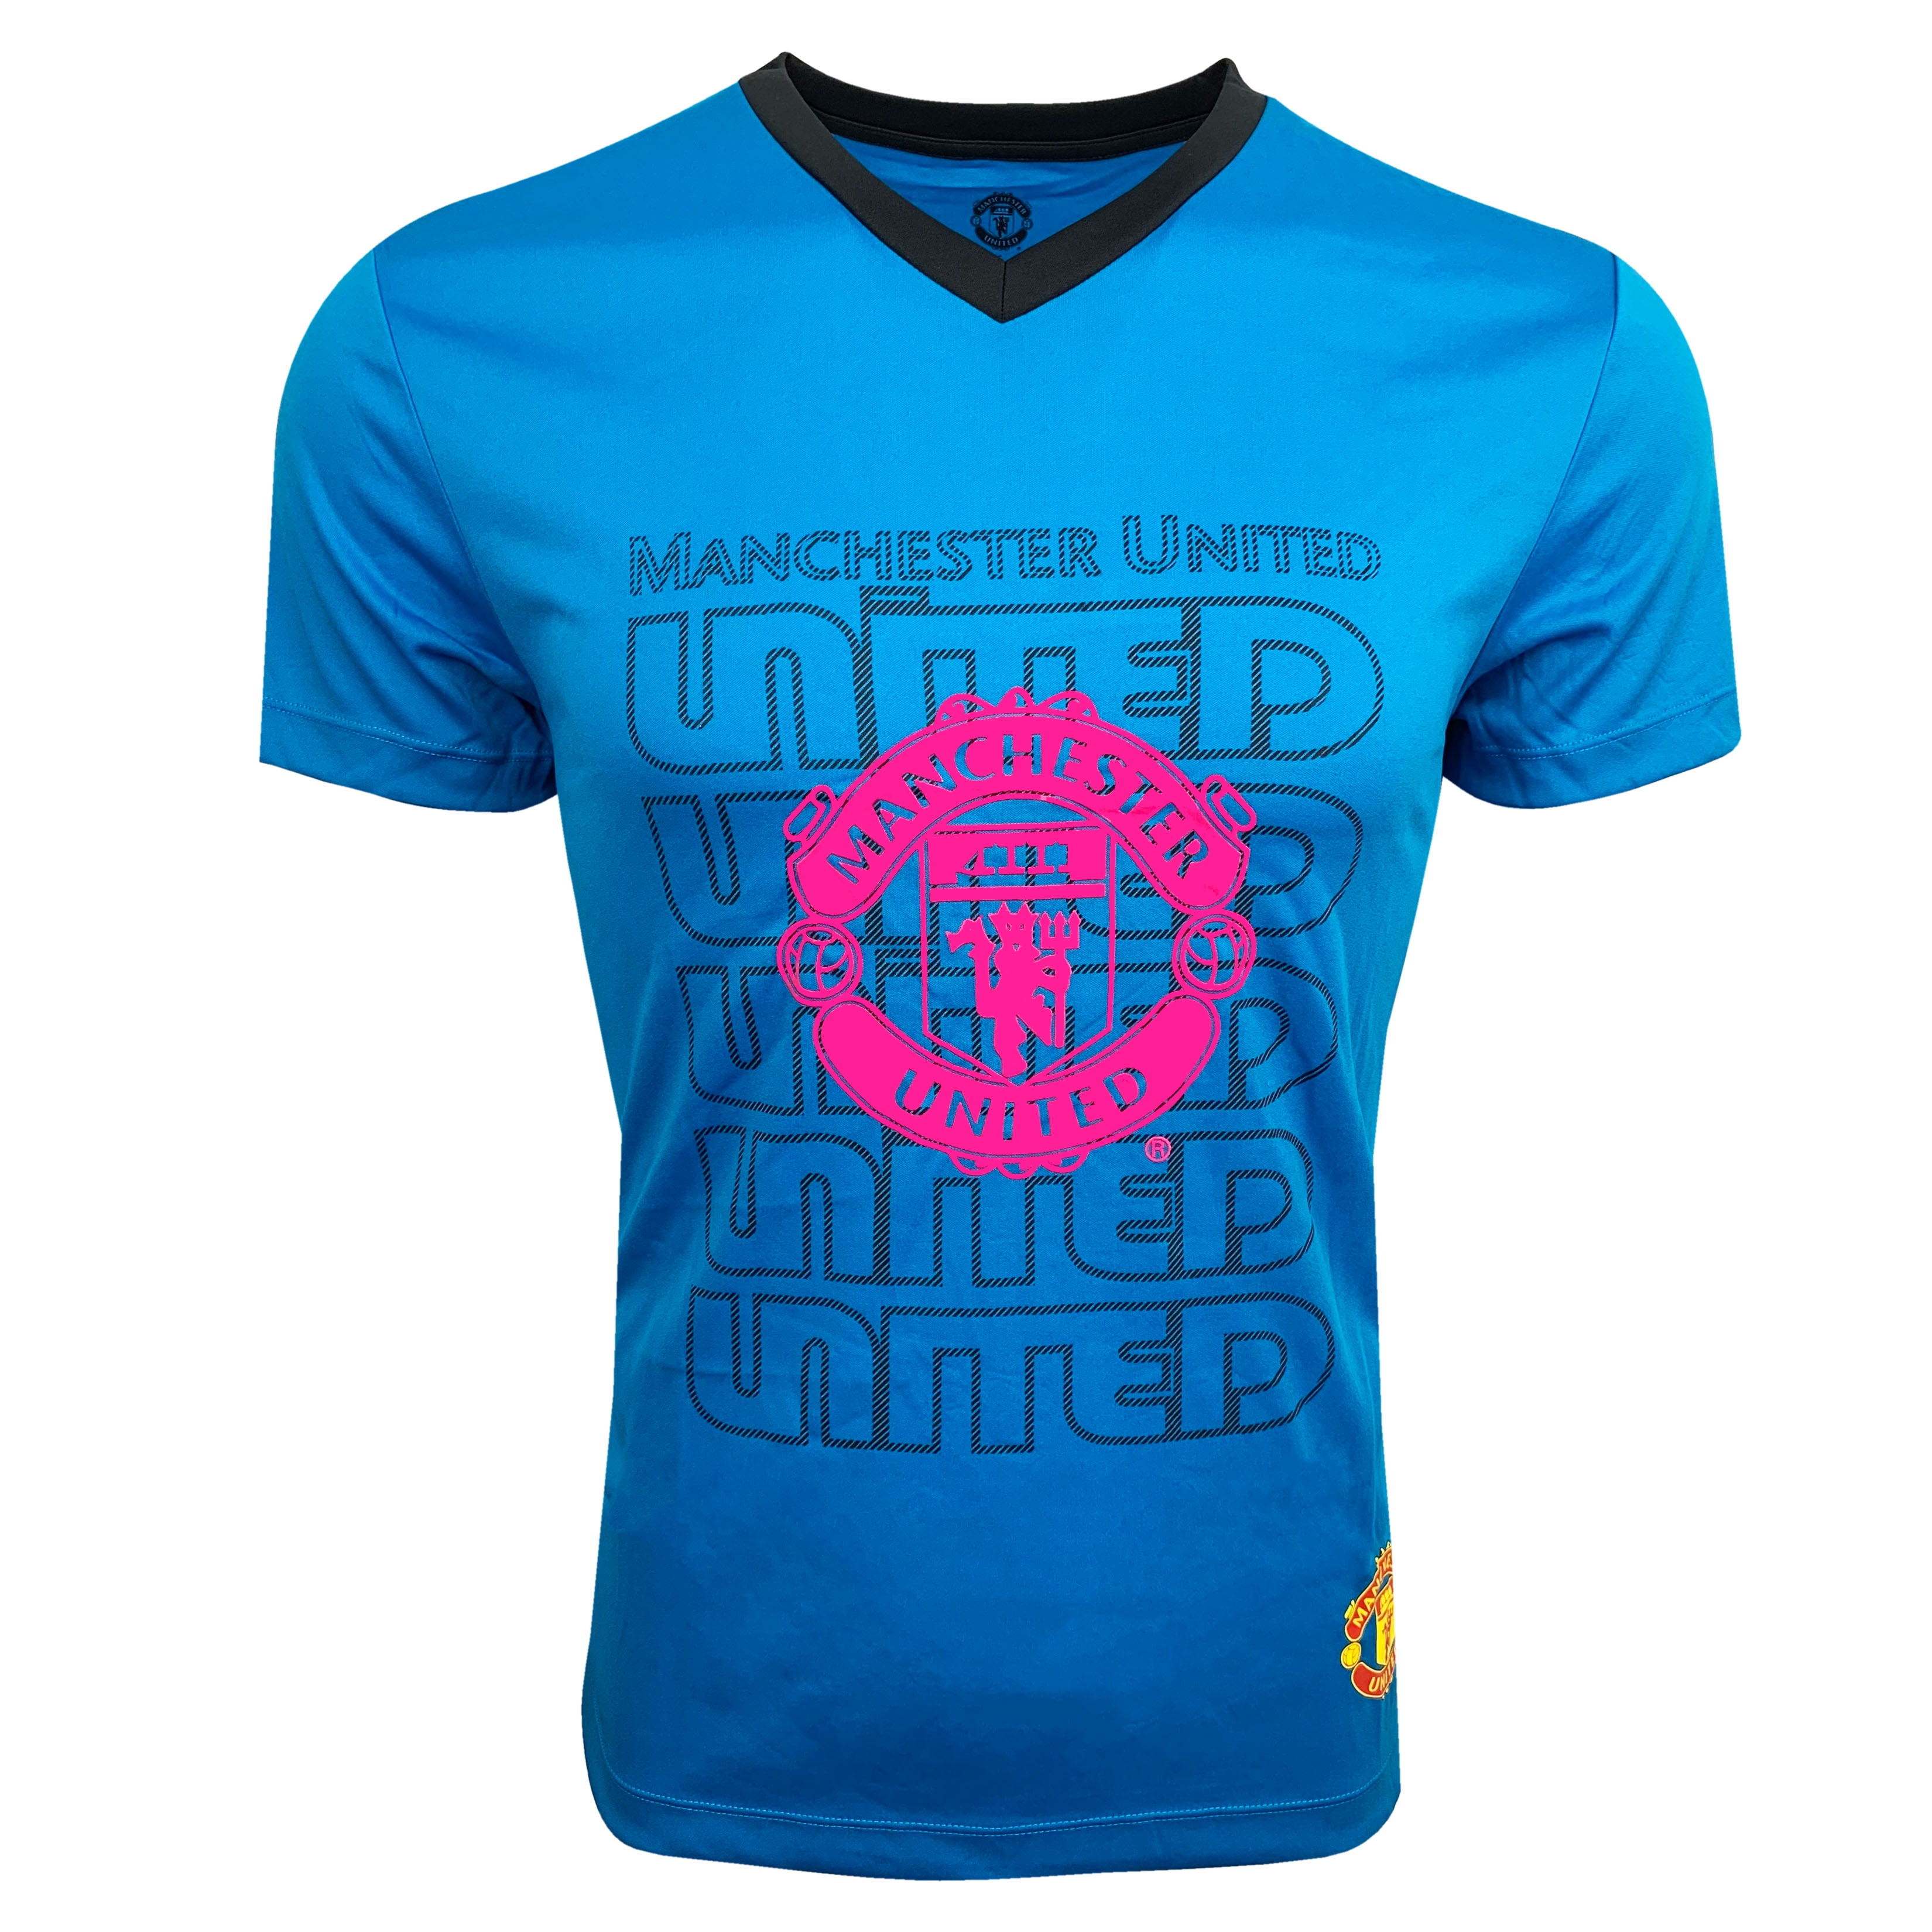 Manchester United Licensed Manchester U. Shirt - Walmart.com